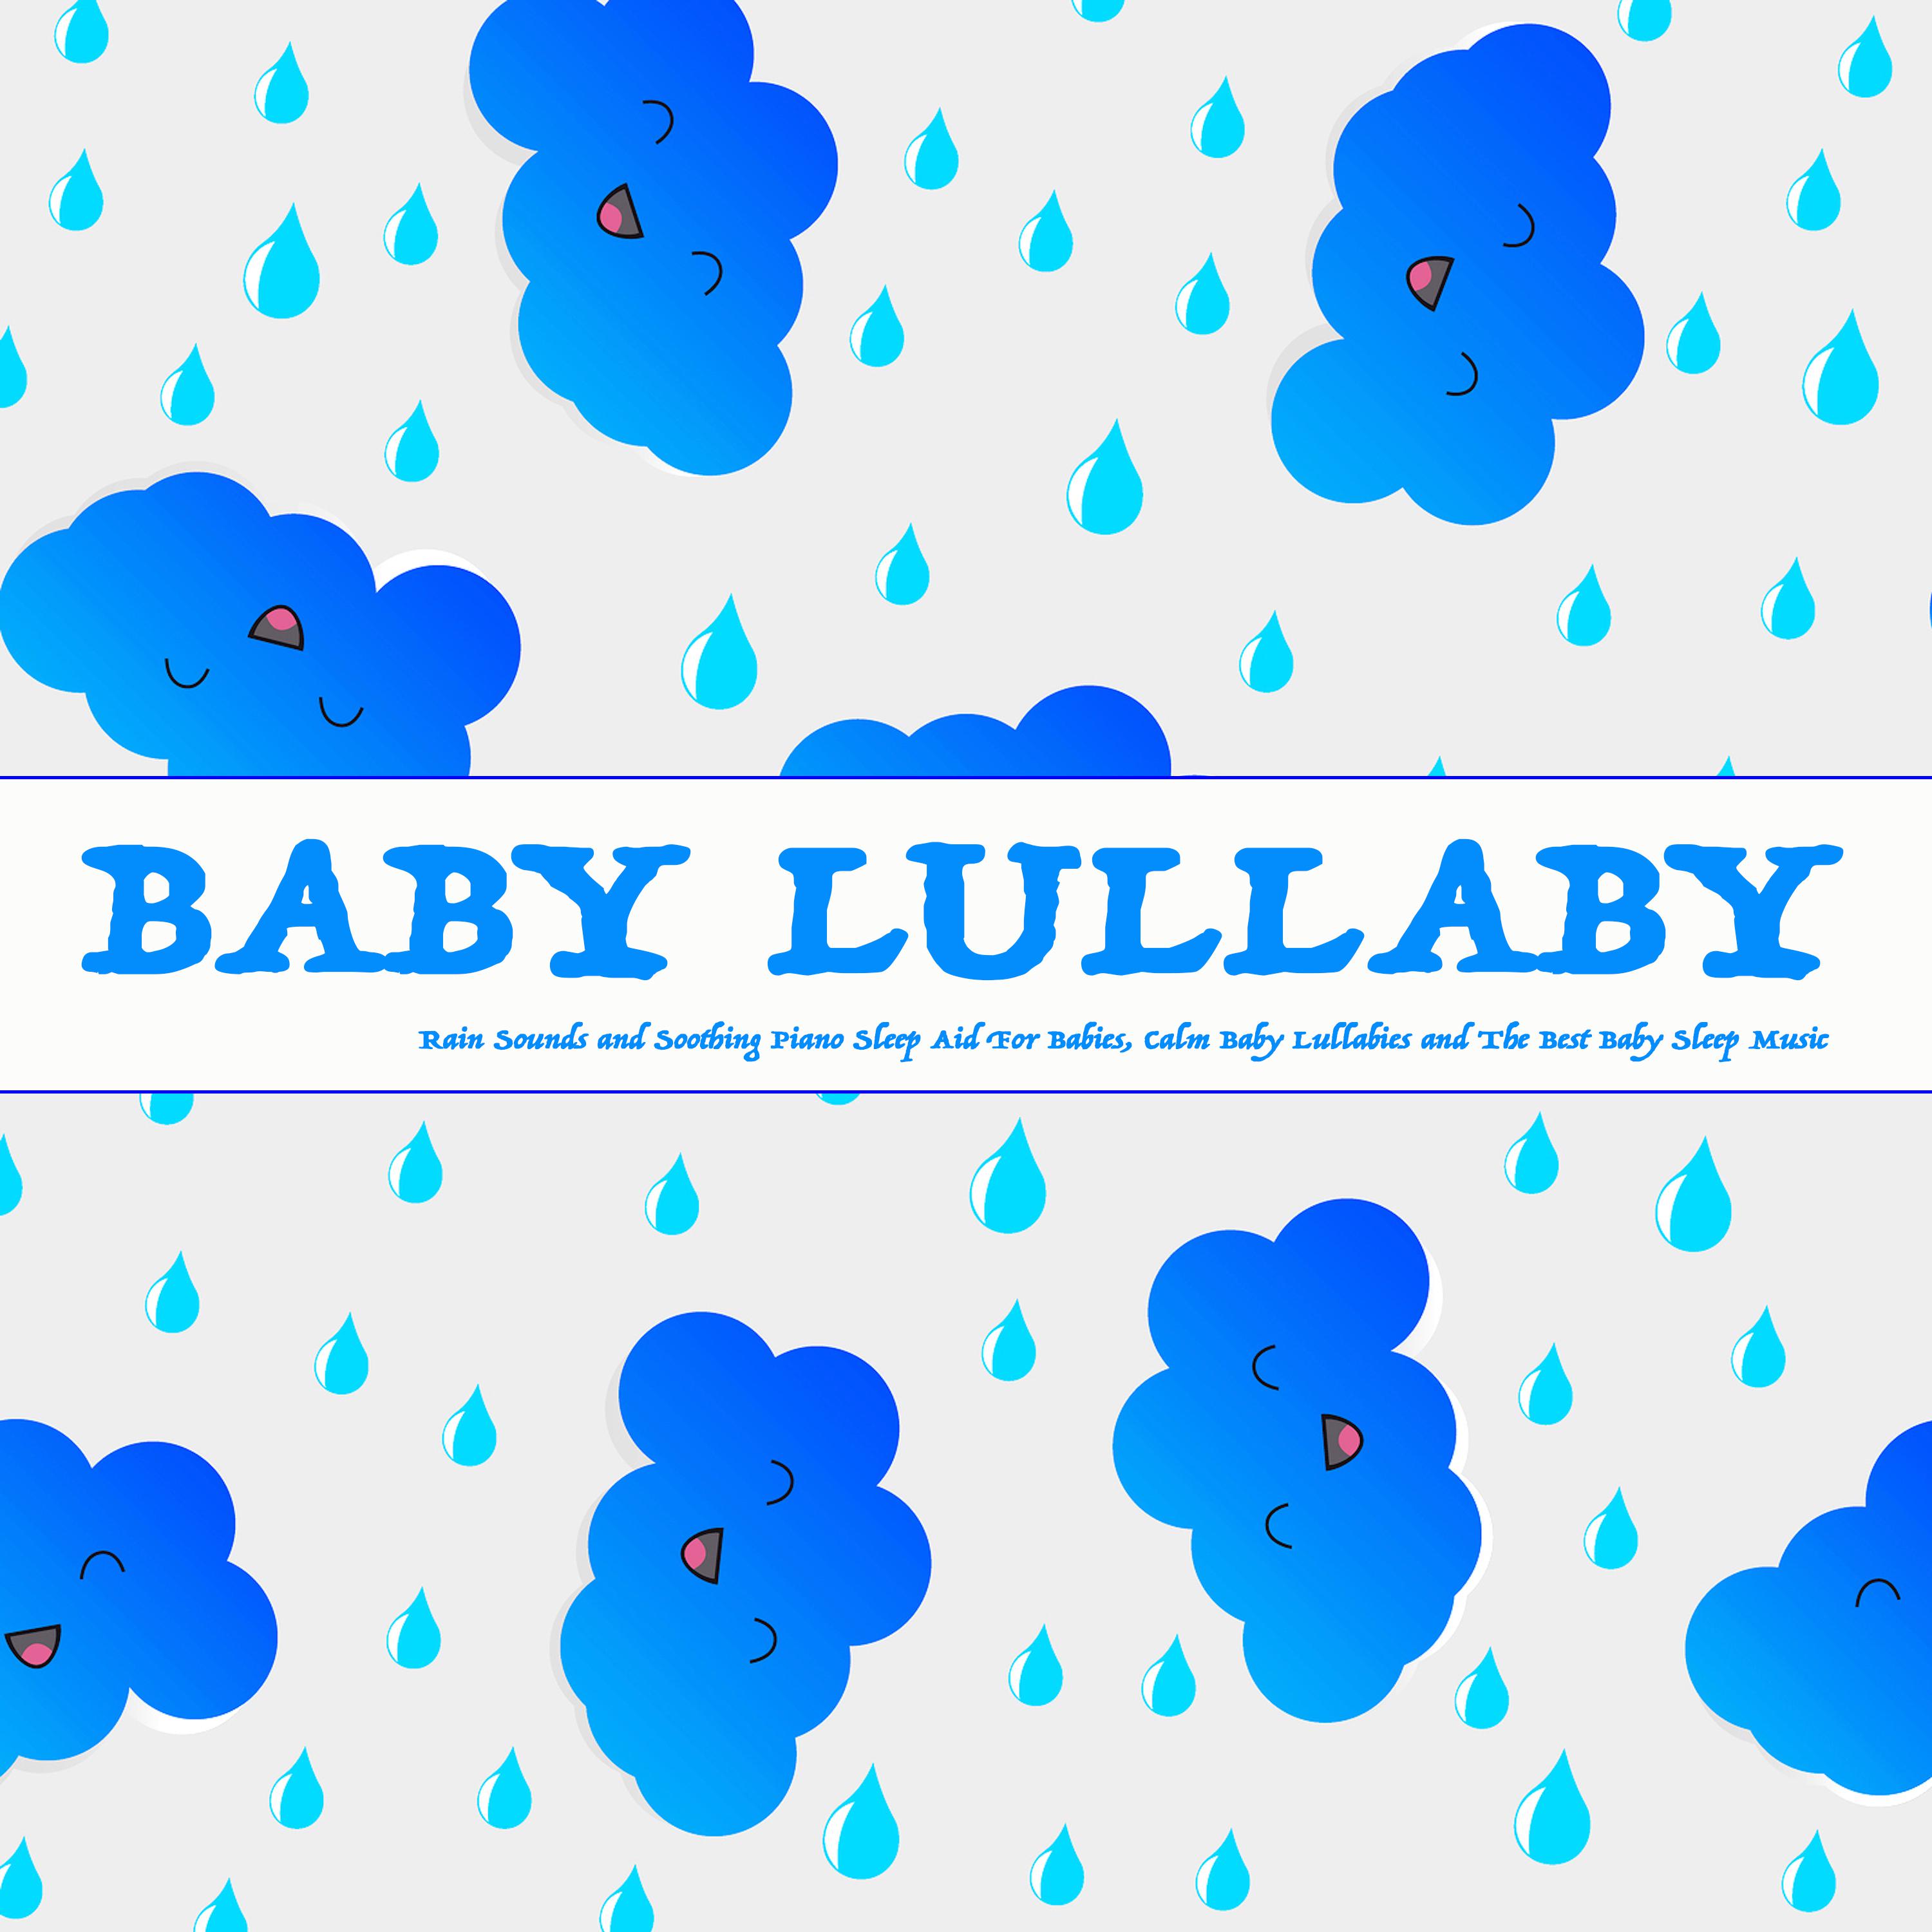 Baby Lullaby Piano and Rain